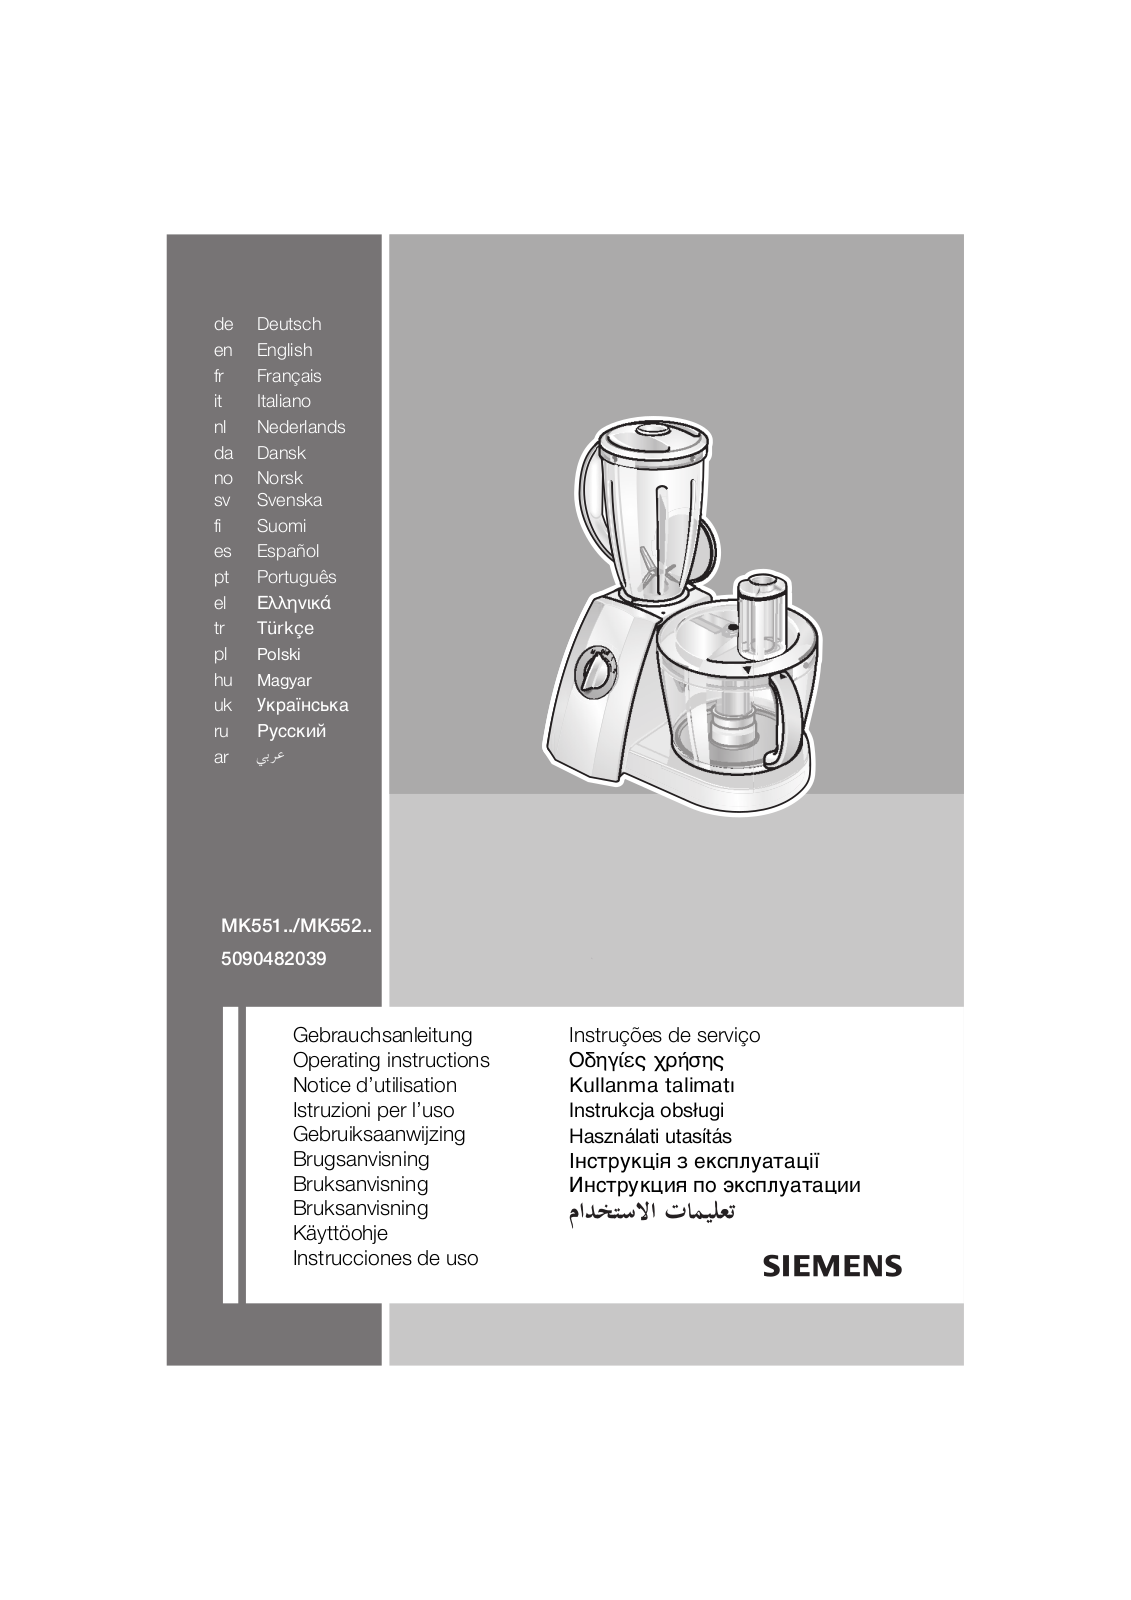 Siemens MK55205, MK55104, MK55100 Manual